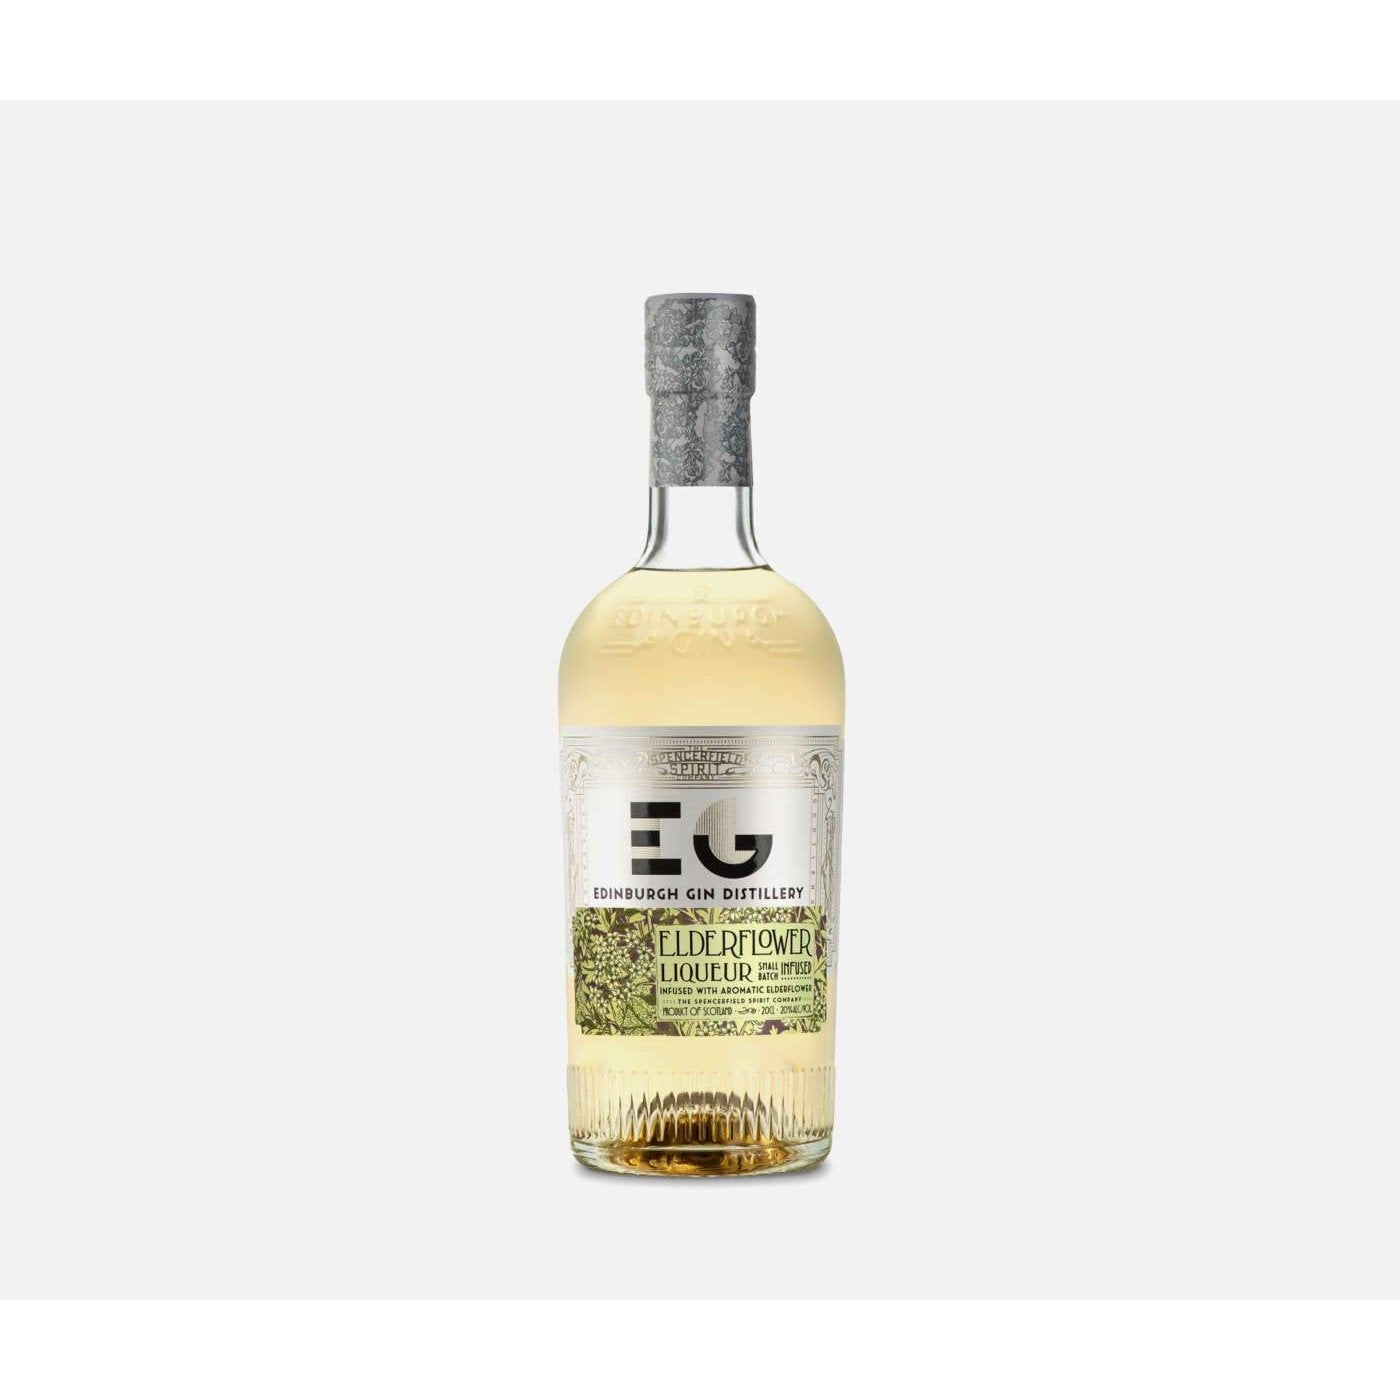 Edinburgh Gin's Elderflower Liqueur 20cl-Gin-5060232070269-Fountainhall Wines